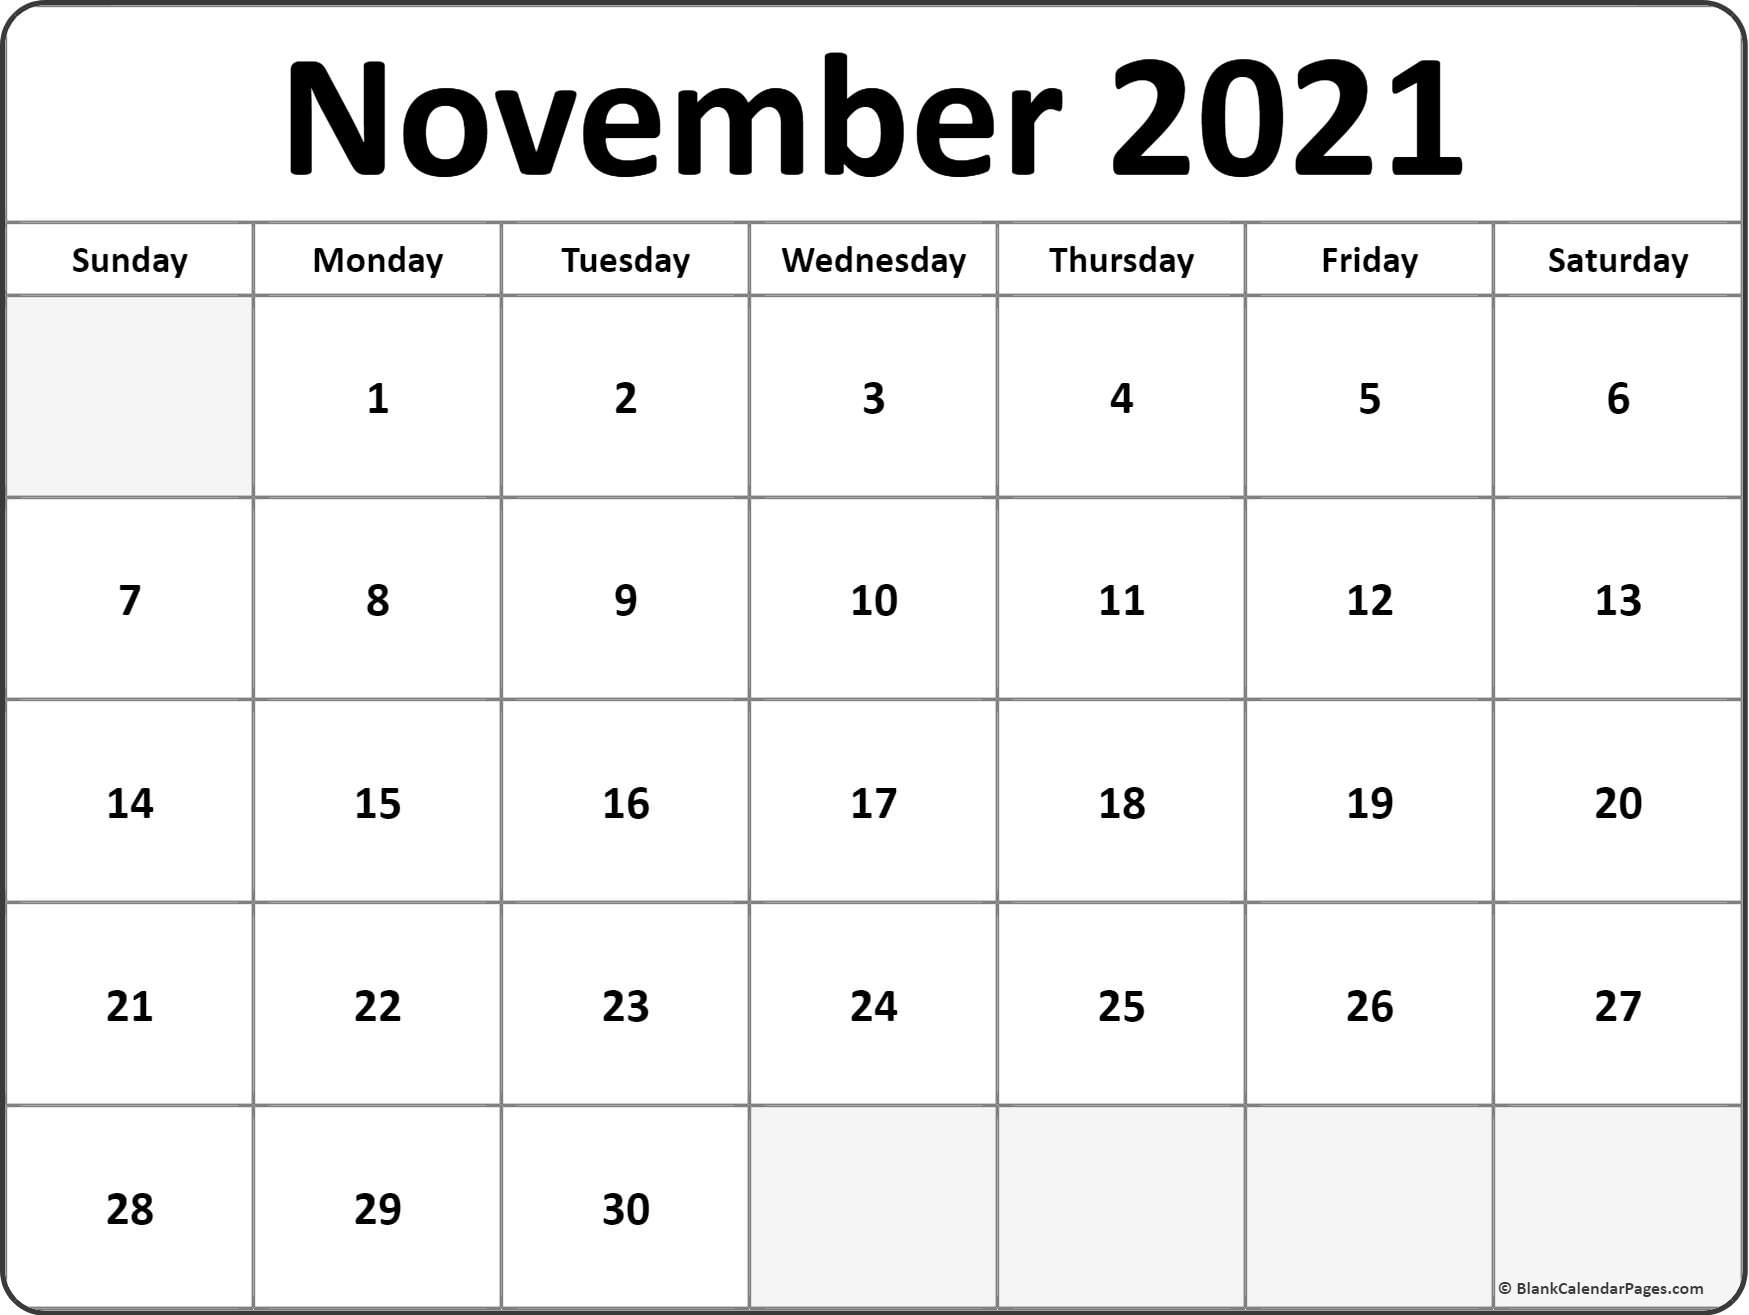 November 2021 Blank Calendar Templates. November 2021 Bengali Calendar